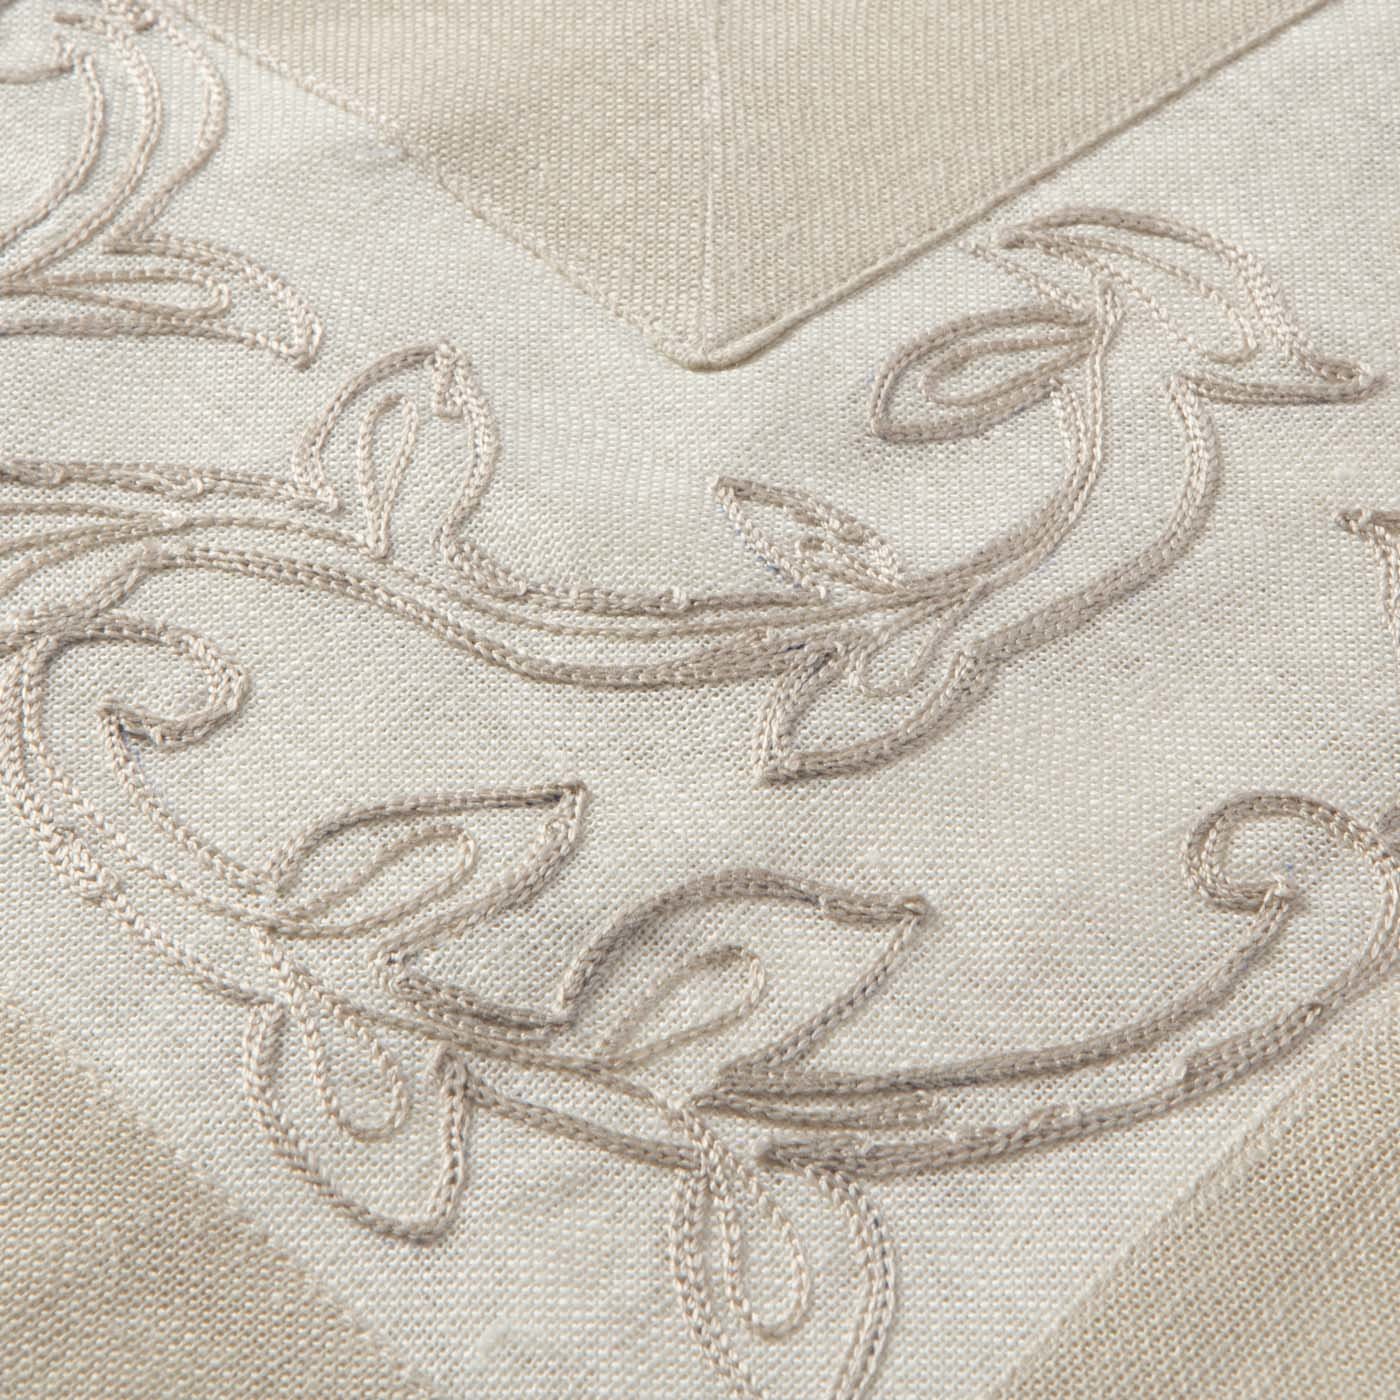 Vasari Linen Tablecloth - Alternative view 3